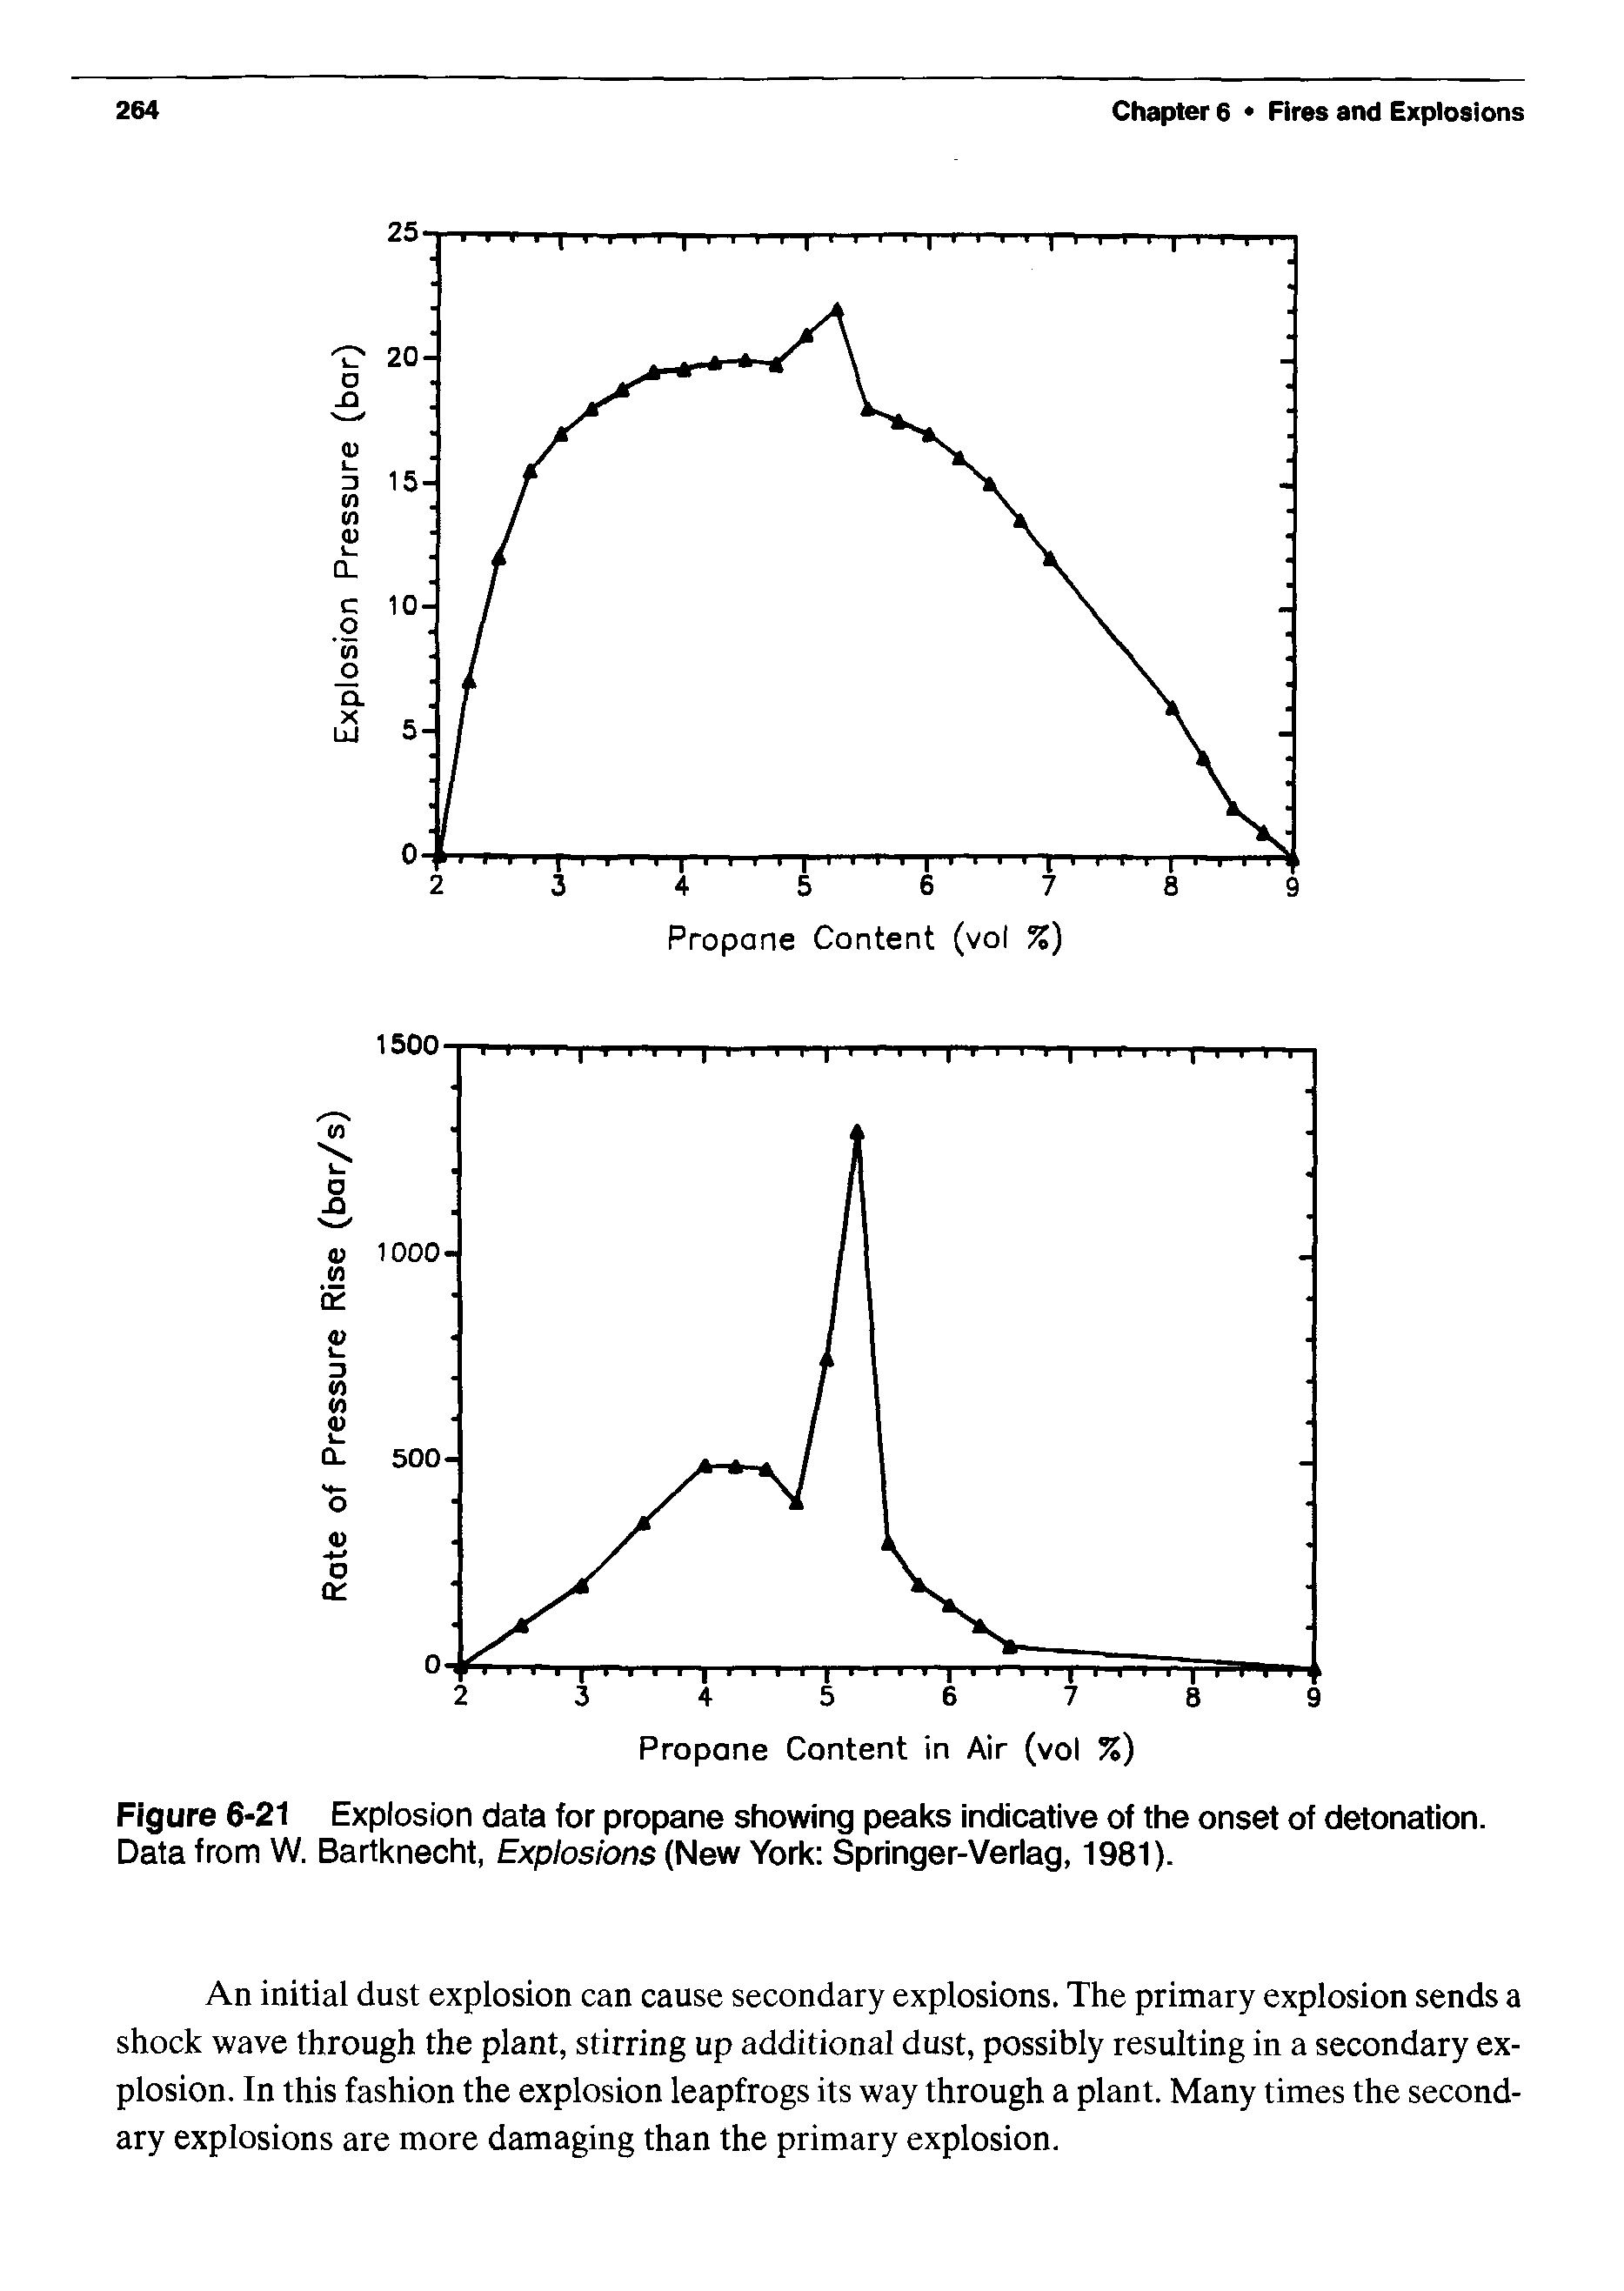 Figure 6-21 Explosion data for propane showing peaks indicative of the onset of detonation. Data from W. Bartknecht, Explosions (New York Springer-Verlag, 1981).